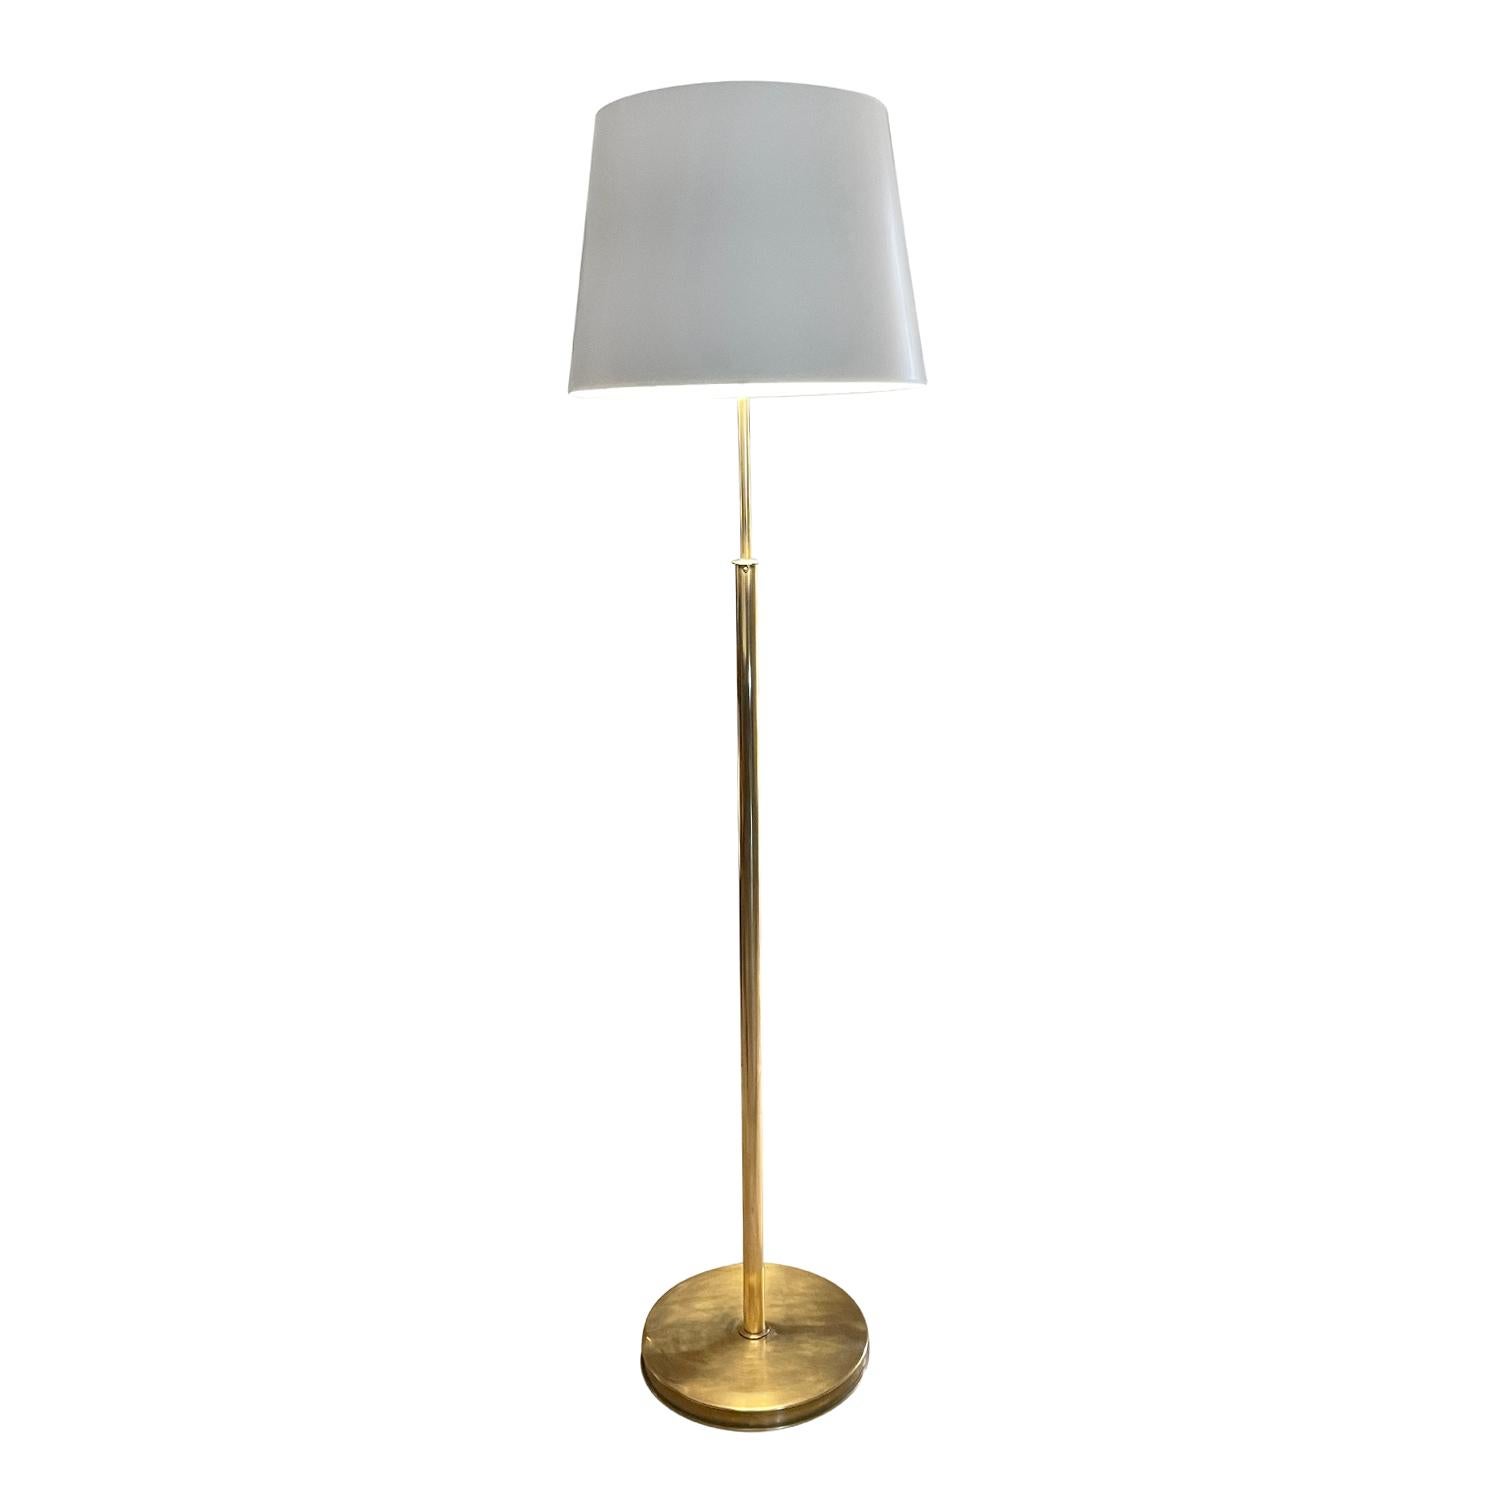 20th Century Swedish Svenskt Tenn Brass Floor Lamp, Vintage Light by Josef Frank In Good Condition For Sale In West Palm Beach, FL